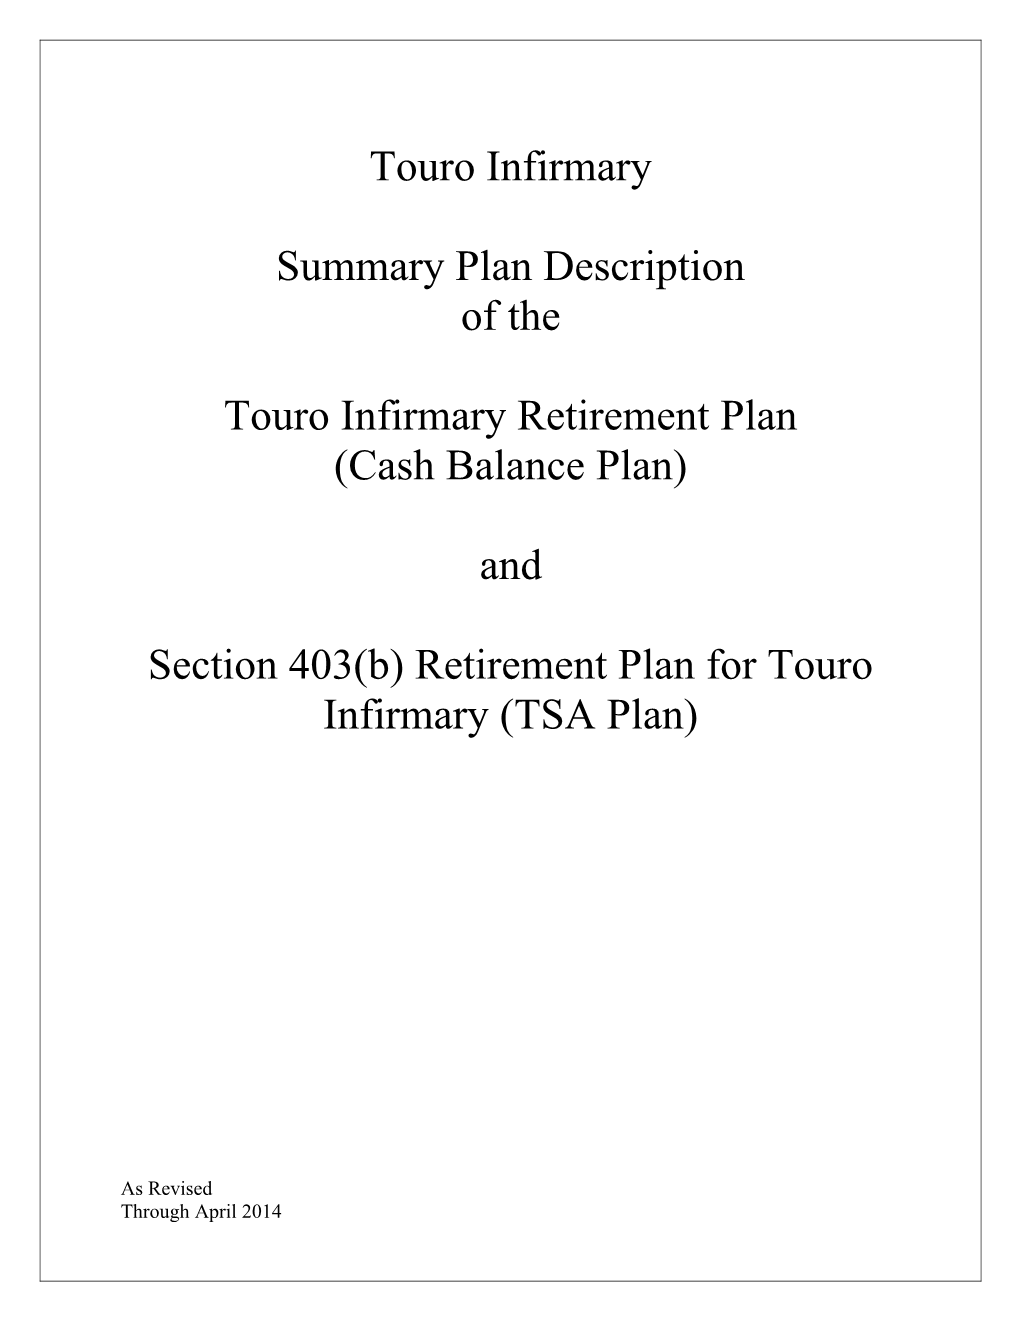 SPD Retirement Plan and 403(B) Plan - 1-8-2009 (00083668-2)